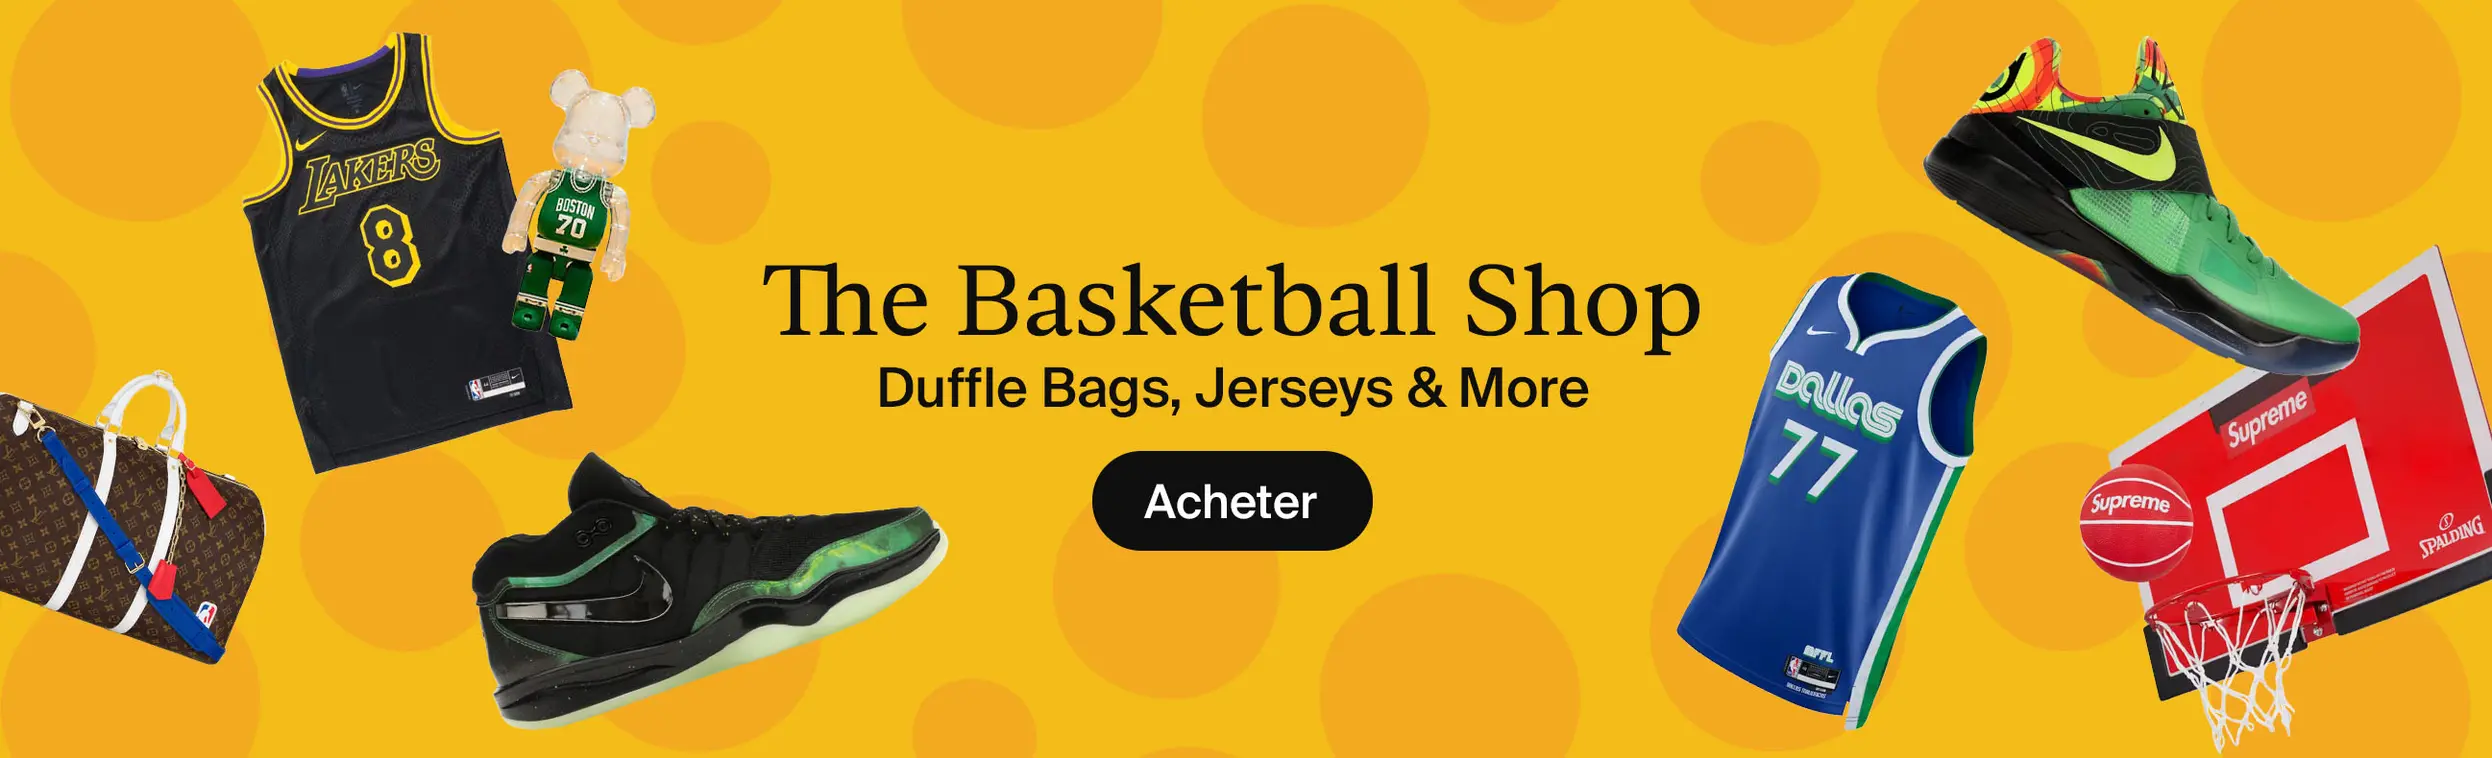 Basketball_Shop-Banners-FRPrimary_Desktop copy.jpg